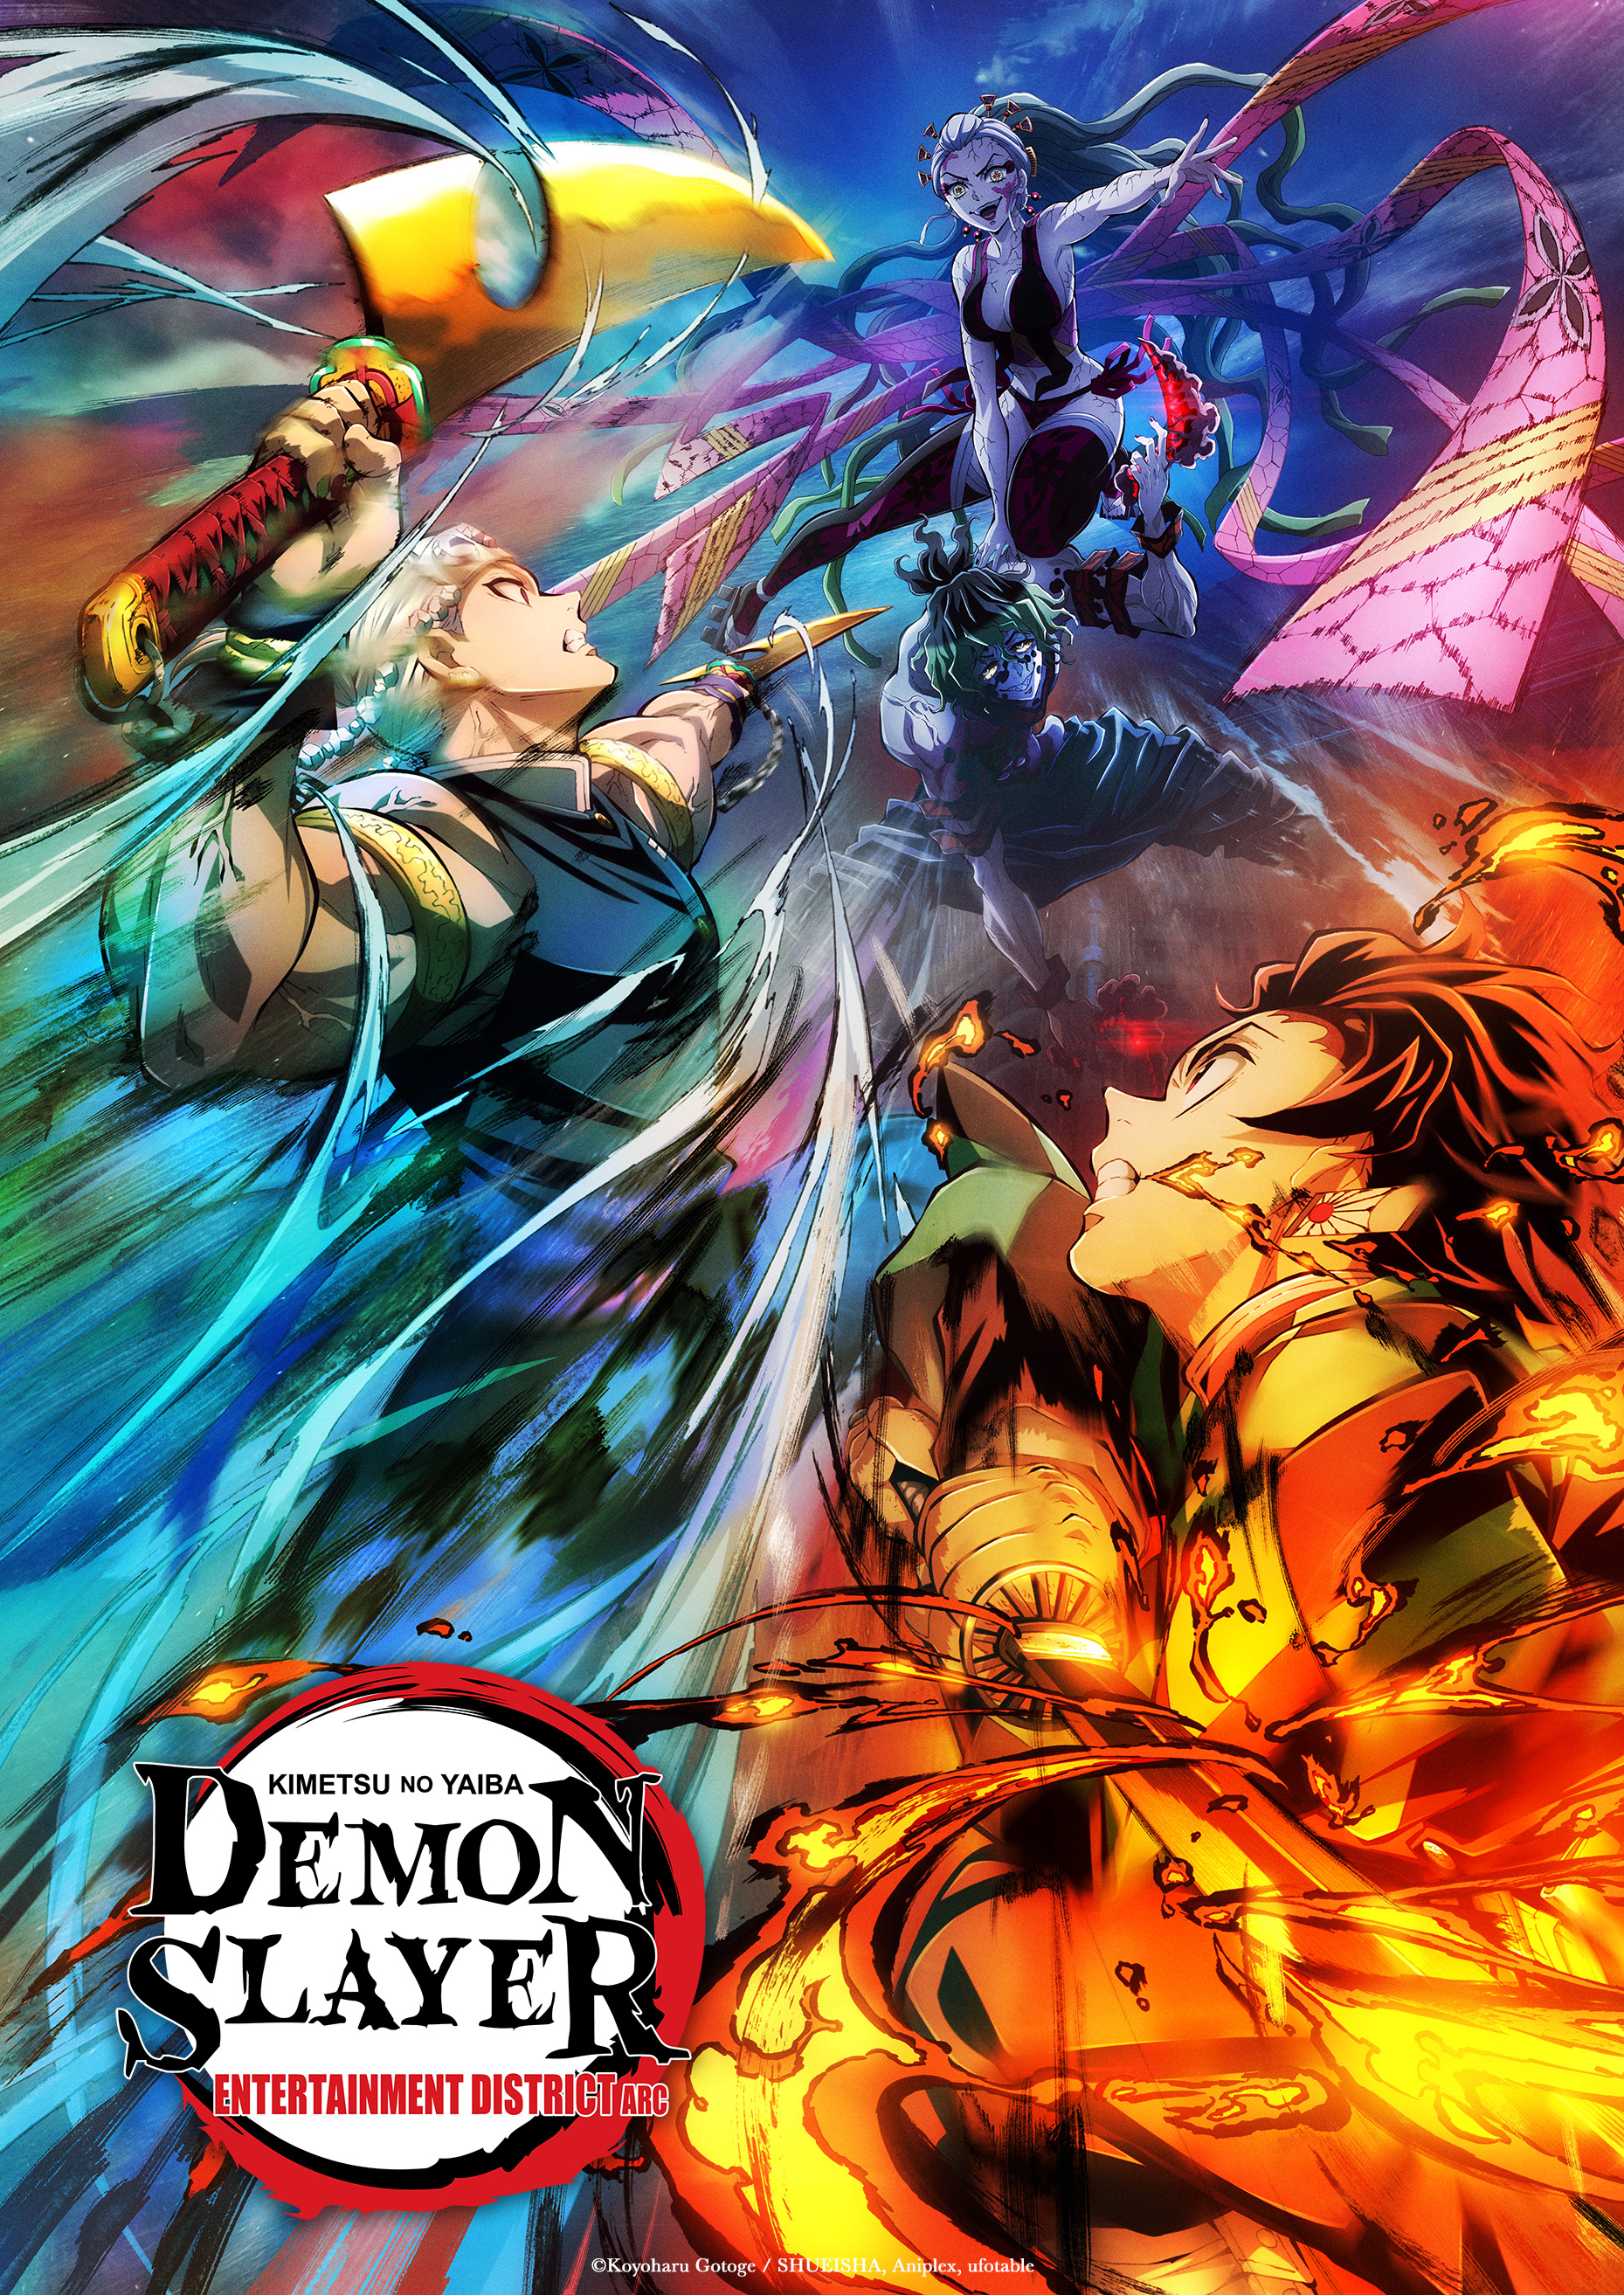 Demon Slayer: Kimetsu no Yaiba (English) and Tengen Uzui face the Upper Six demons Daki and Gyutaro in the new key visual illustrated for Demon Slayer: Kimetsu